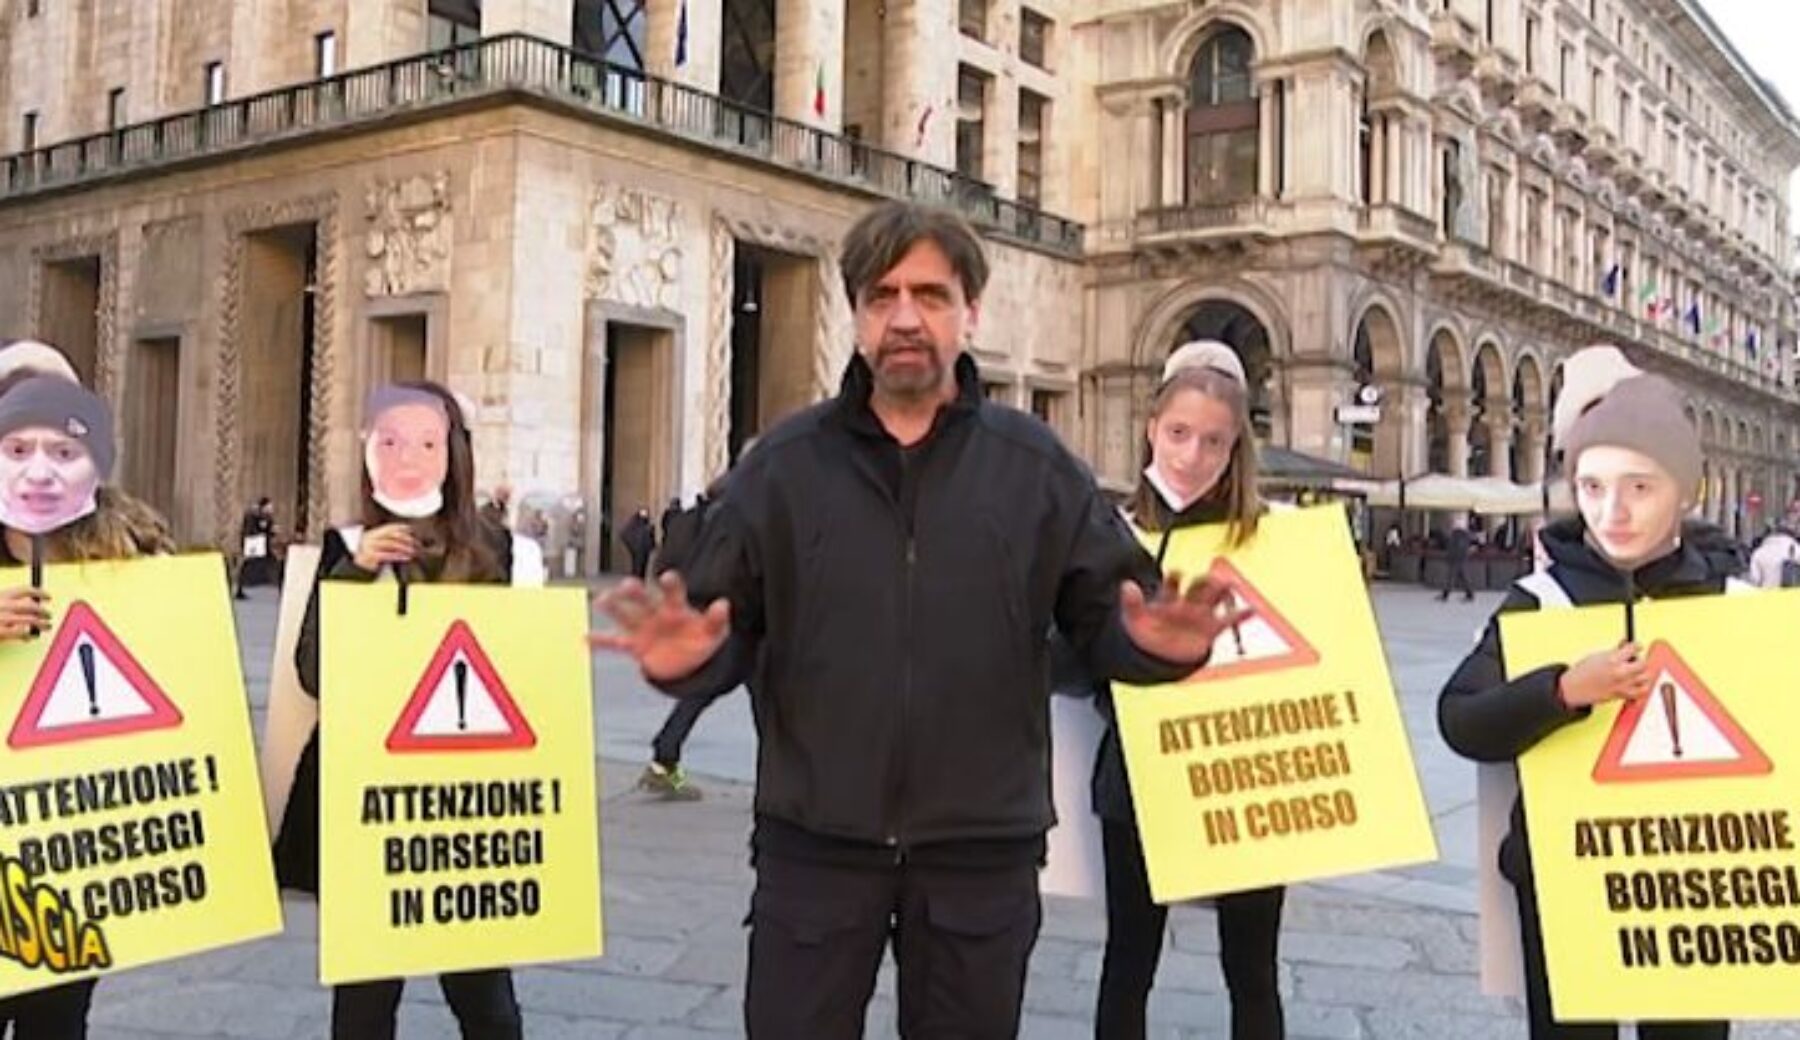 A Milano una regola “speciale”: le borseggiatrici incinte vanno rilasciate